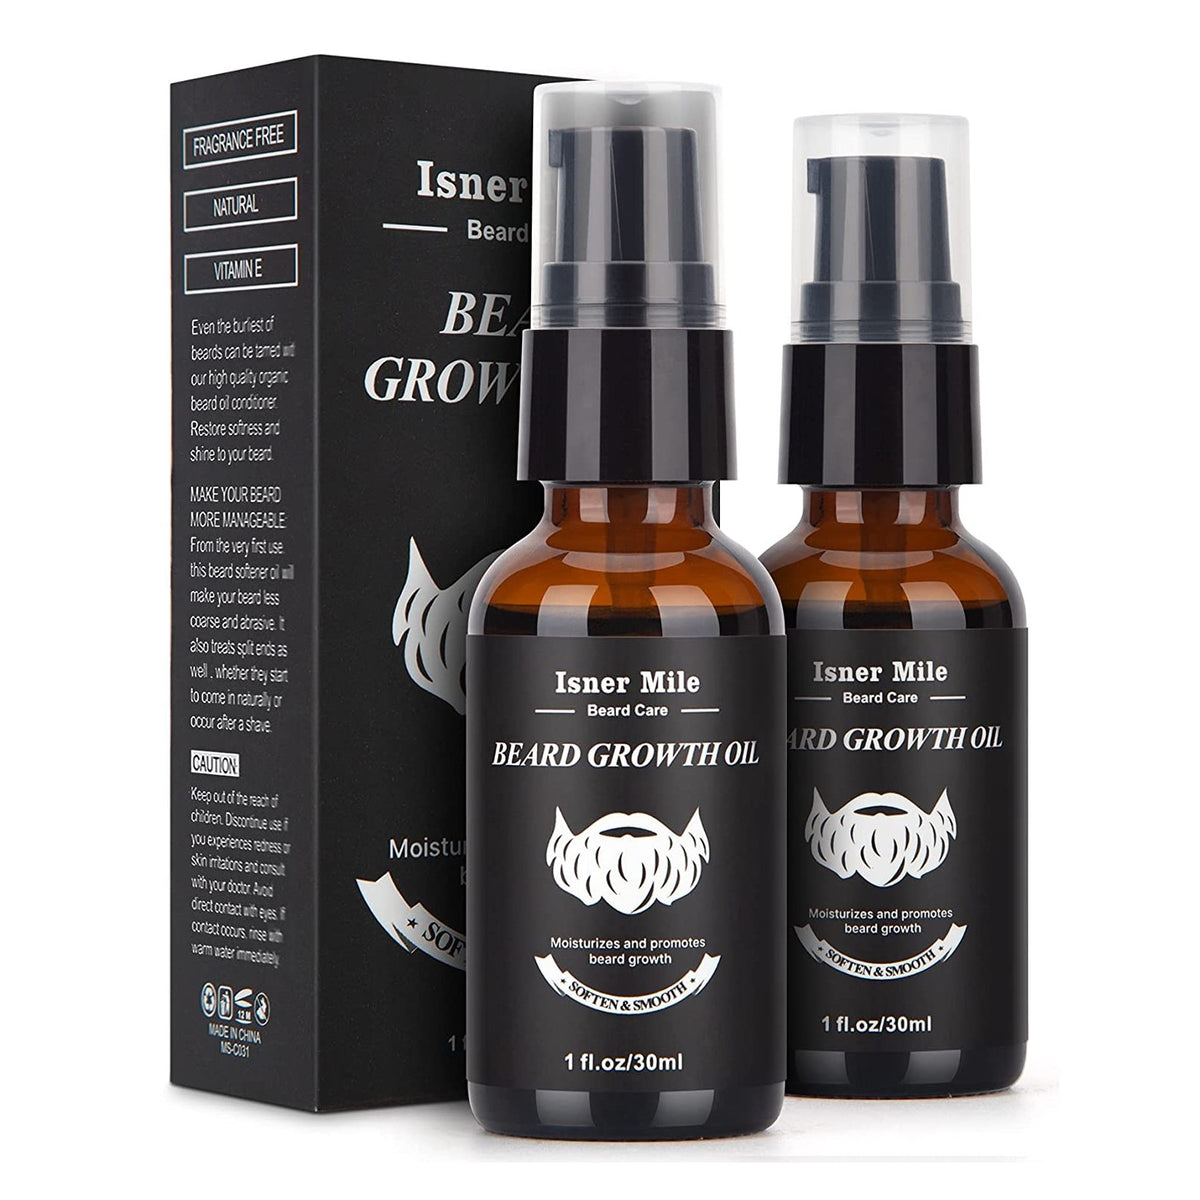 Beard Growth Oil Kit丨2 Pack – Isner Mile